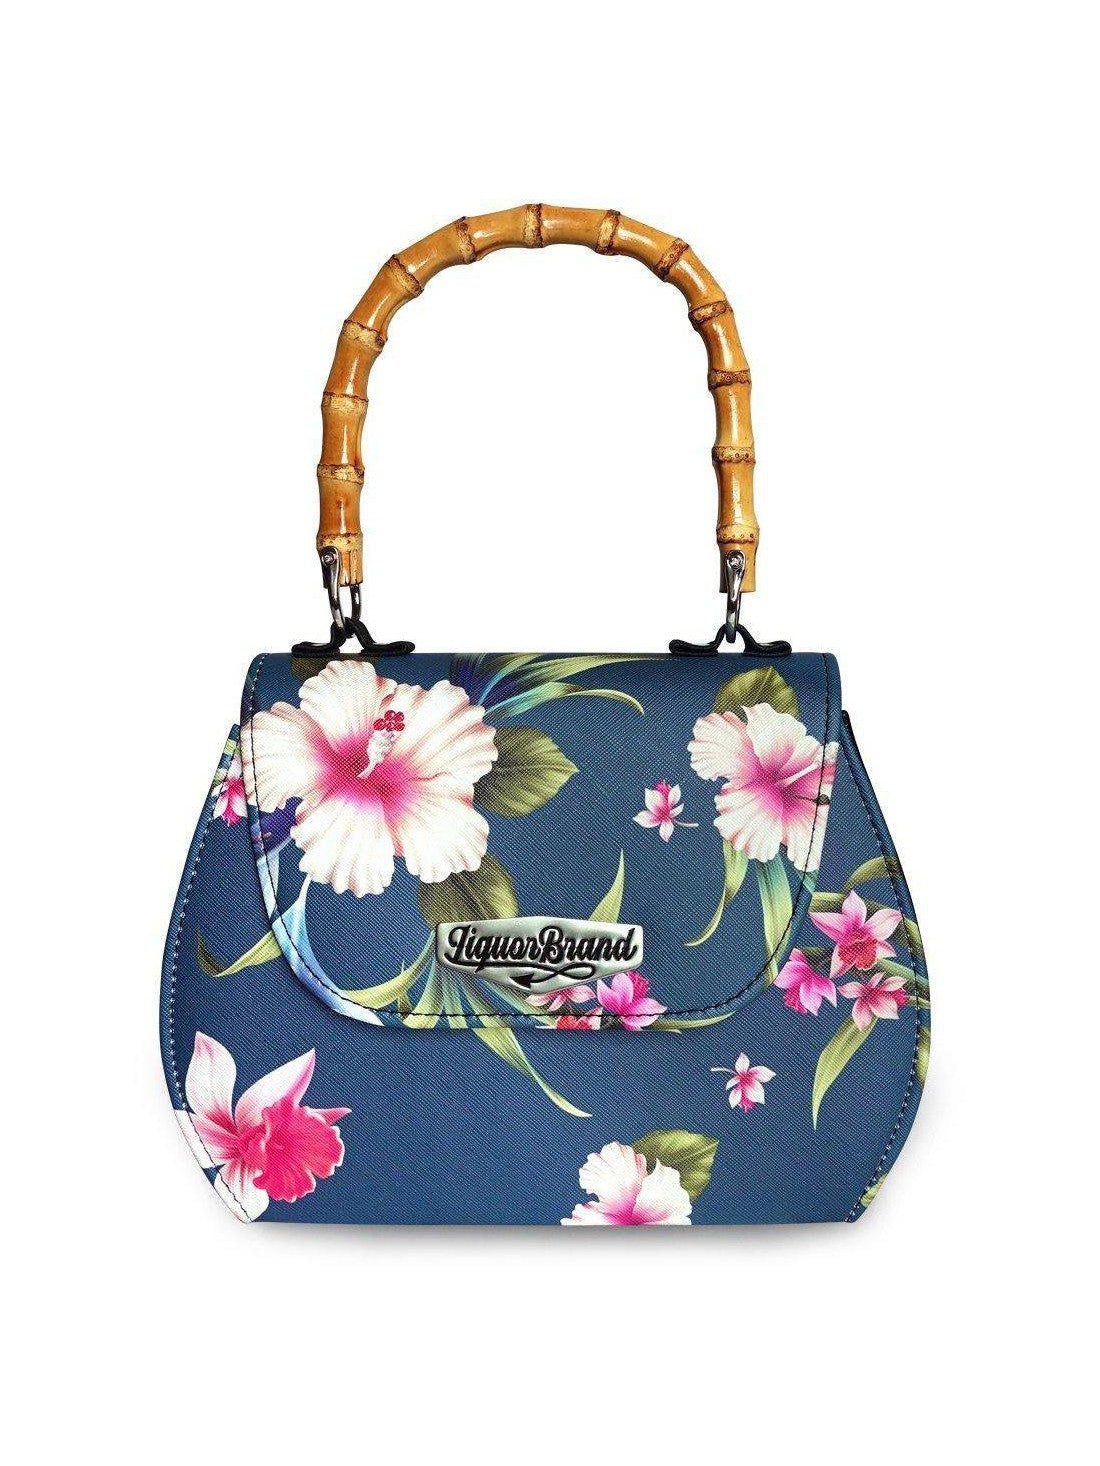 Embroidered & Printed Handbags for Women | Fable England UK